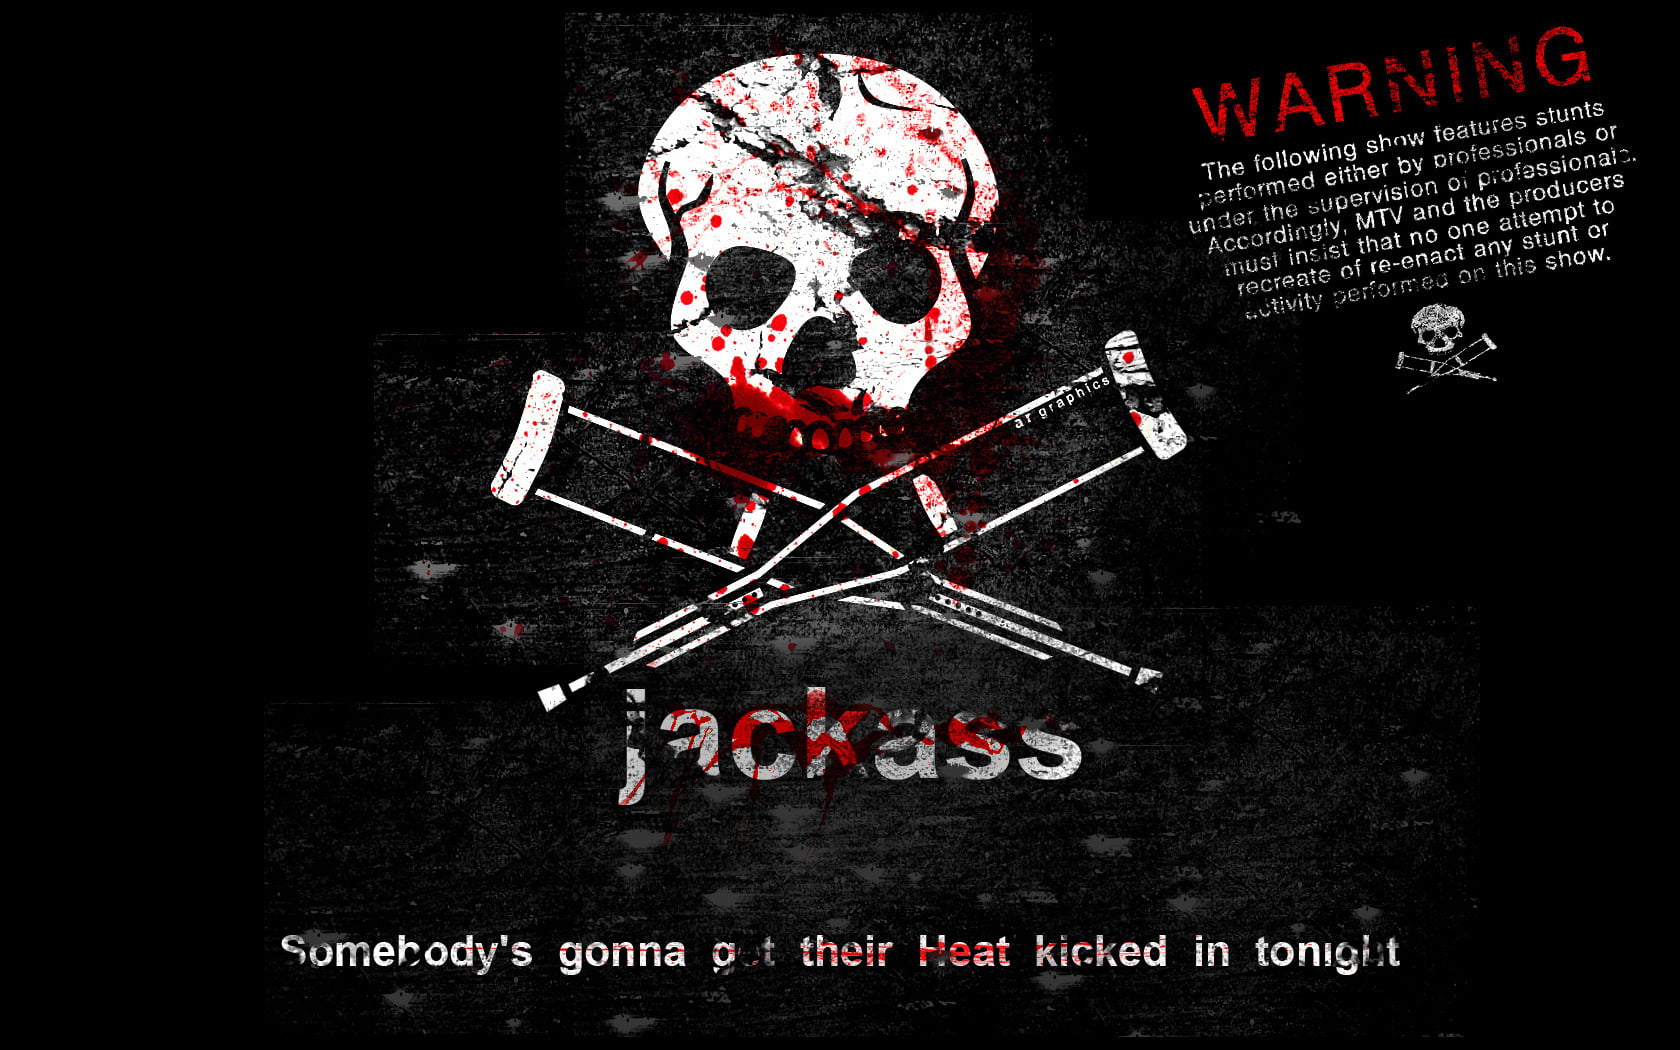 Jackass logo, blood, skull, phrase, Cranks, crutches, human Skull